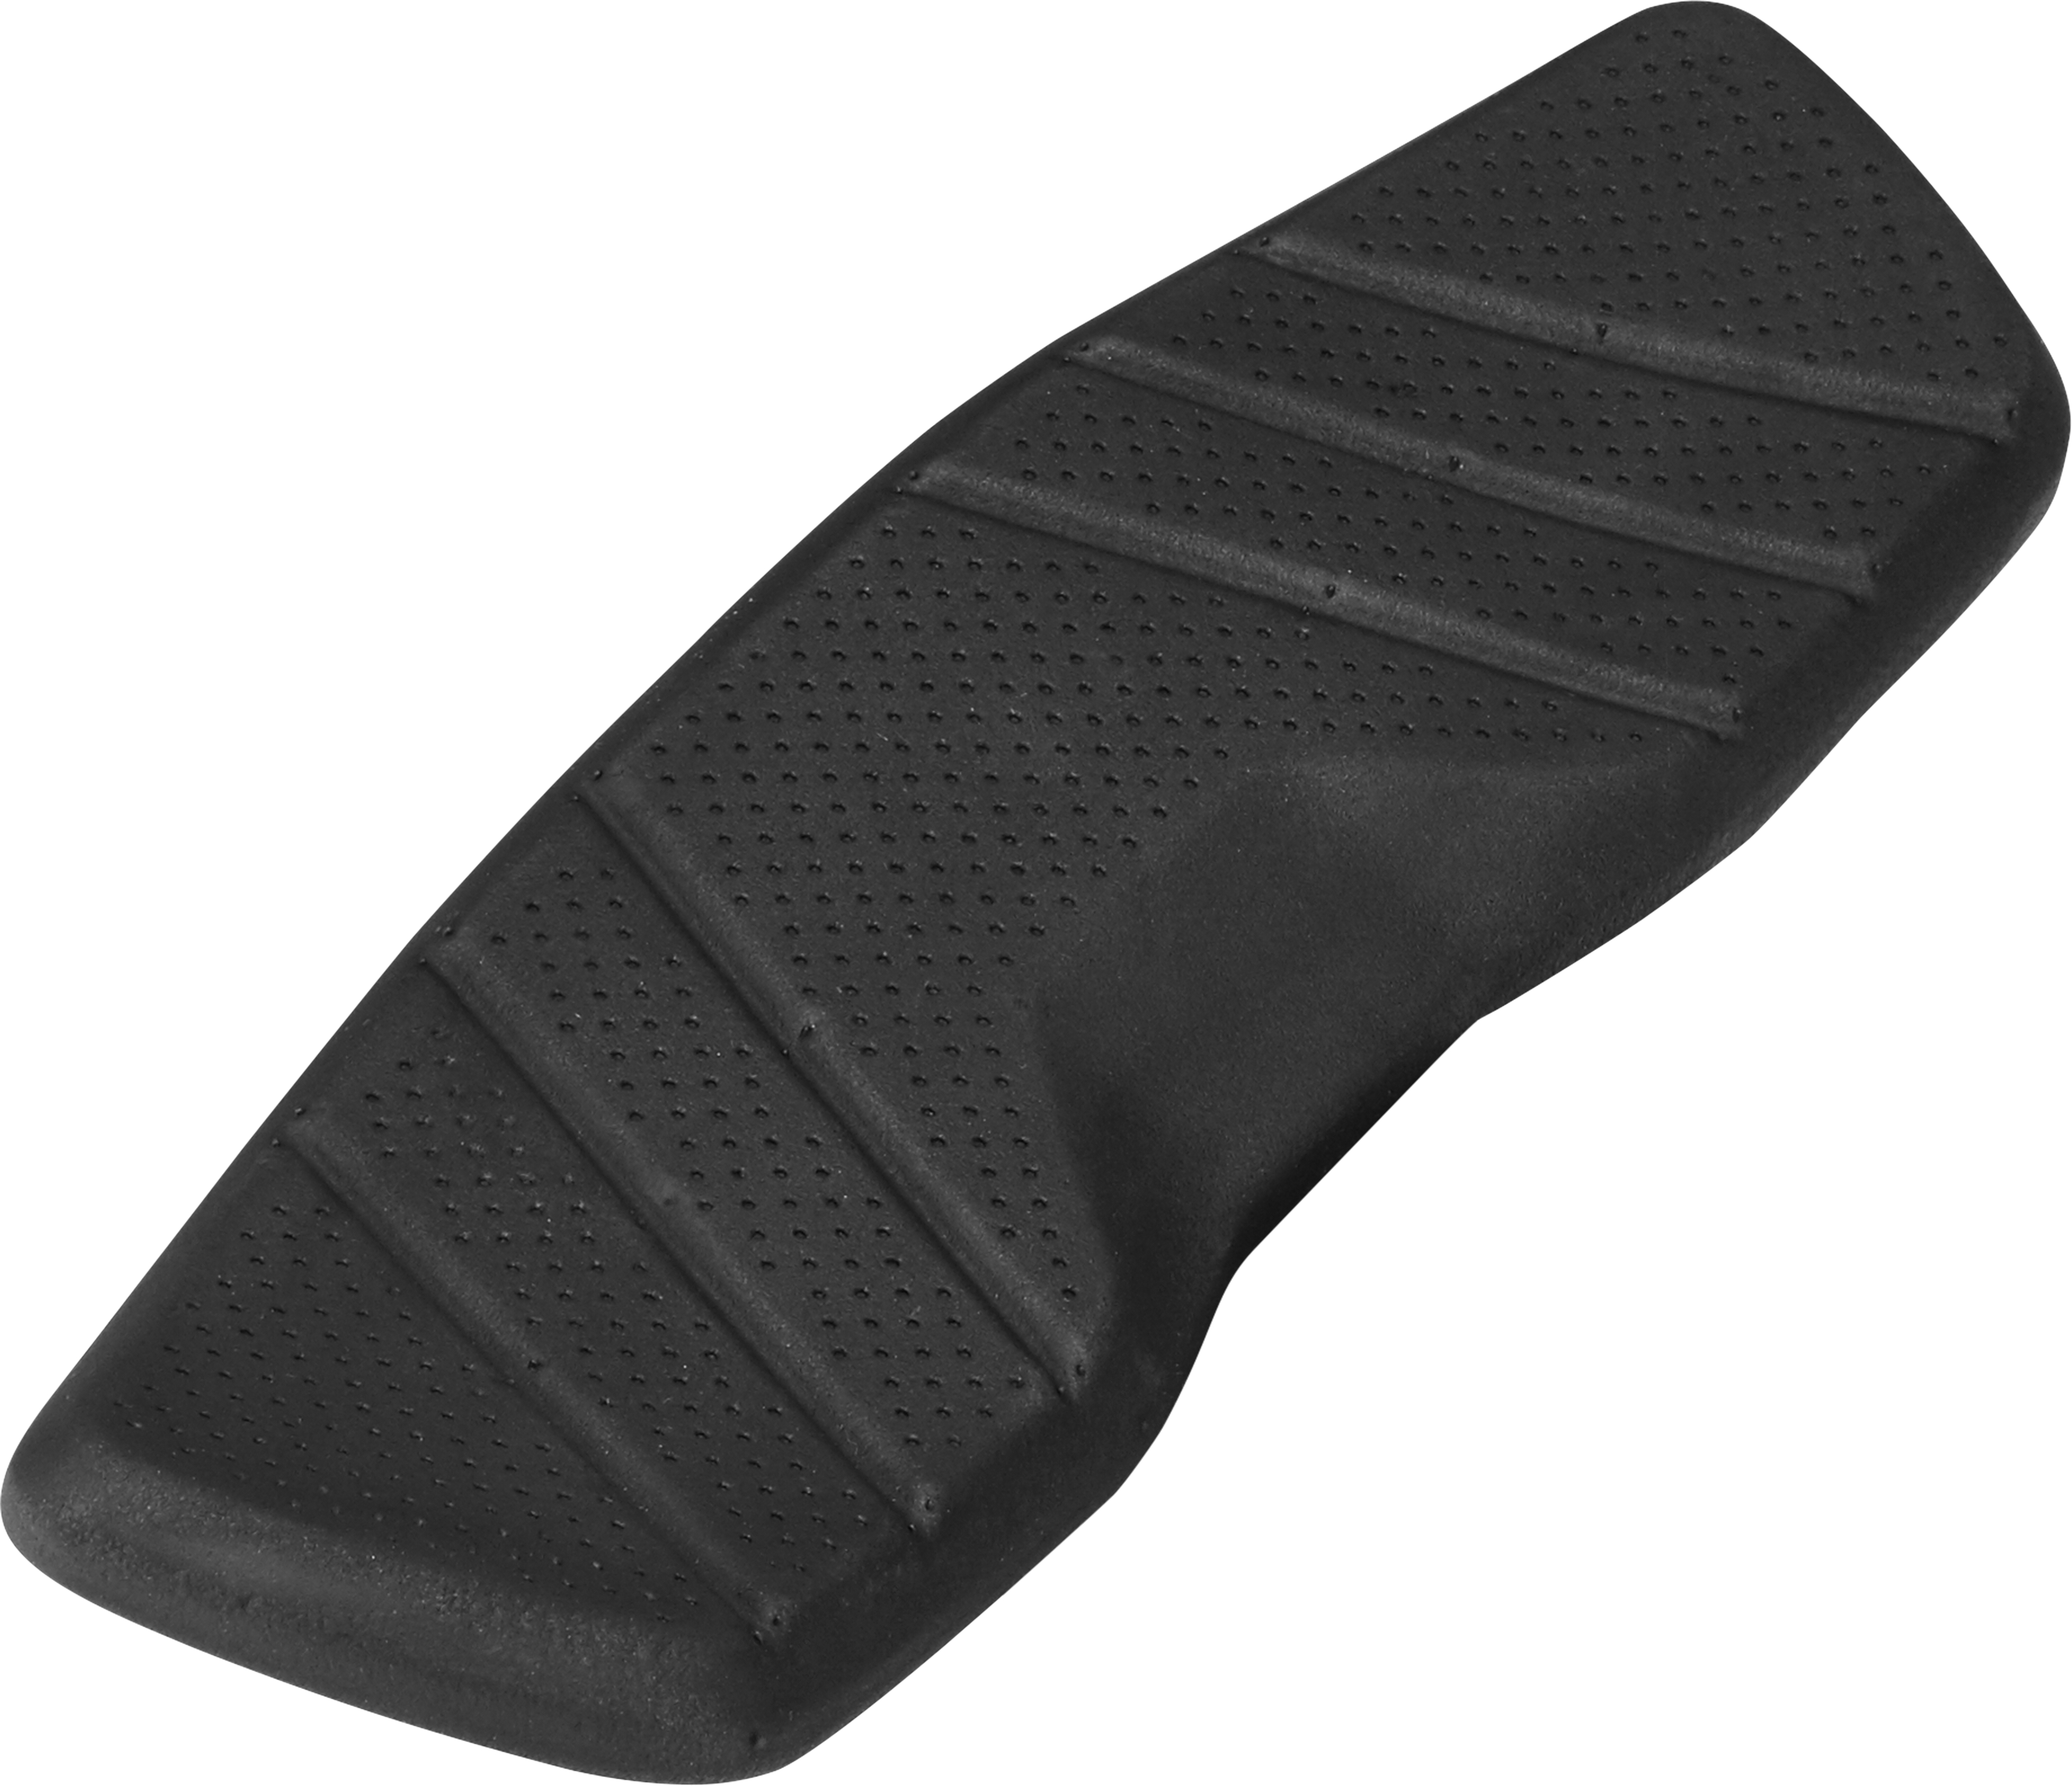 Specialized  Venge ITU/TT/TRI Clip-On Aero Bar Pad in Black  Black